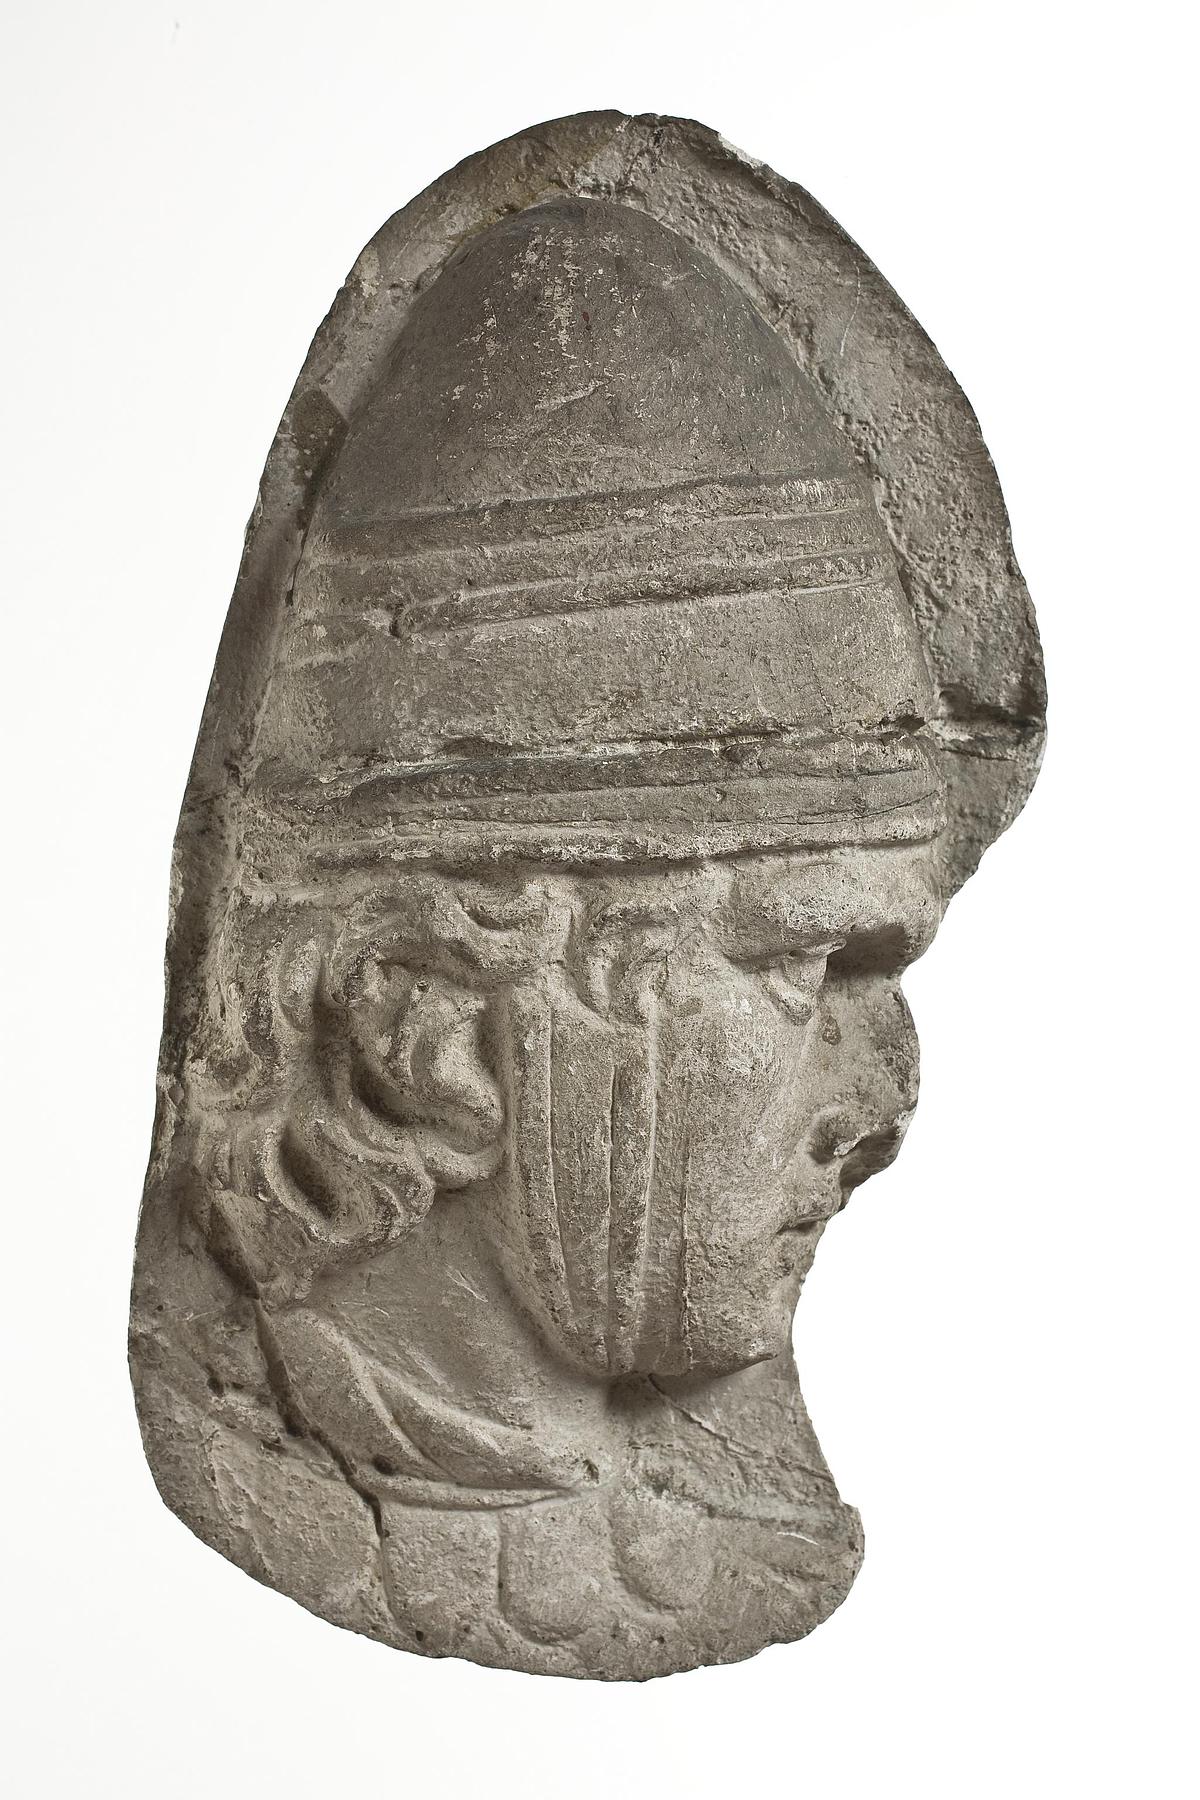 Heads of Sarmatian horsemen wearing conical helmets, L333d